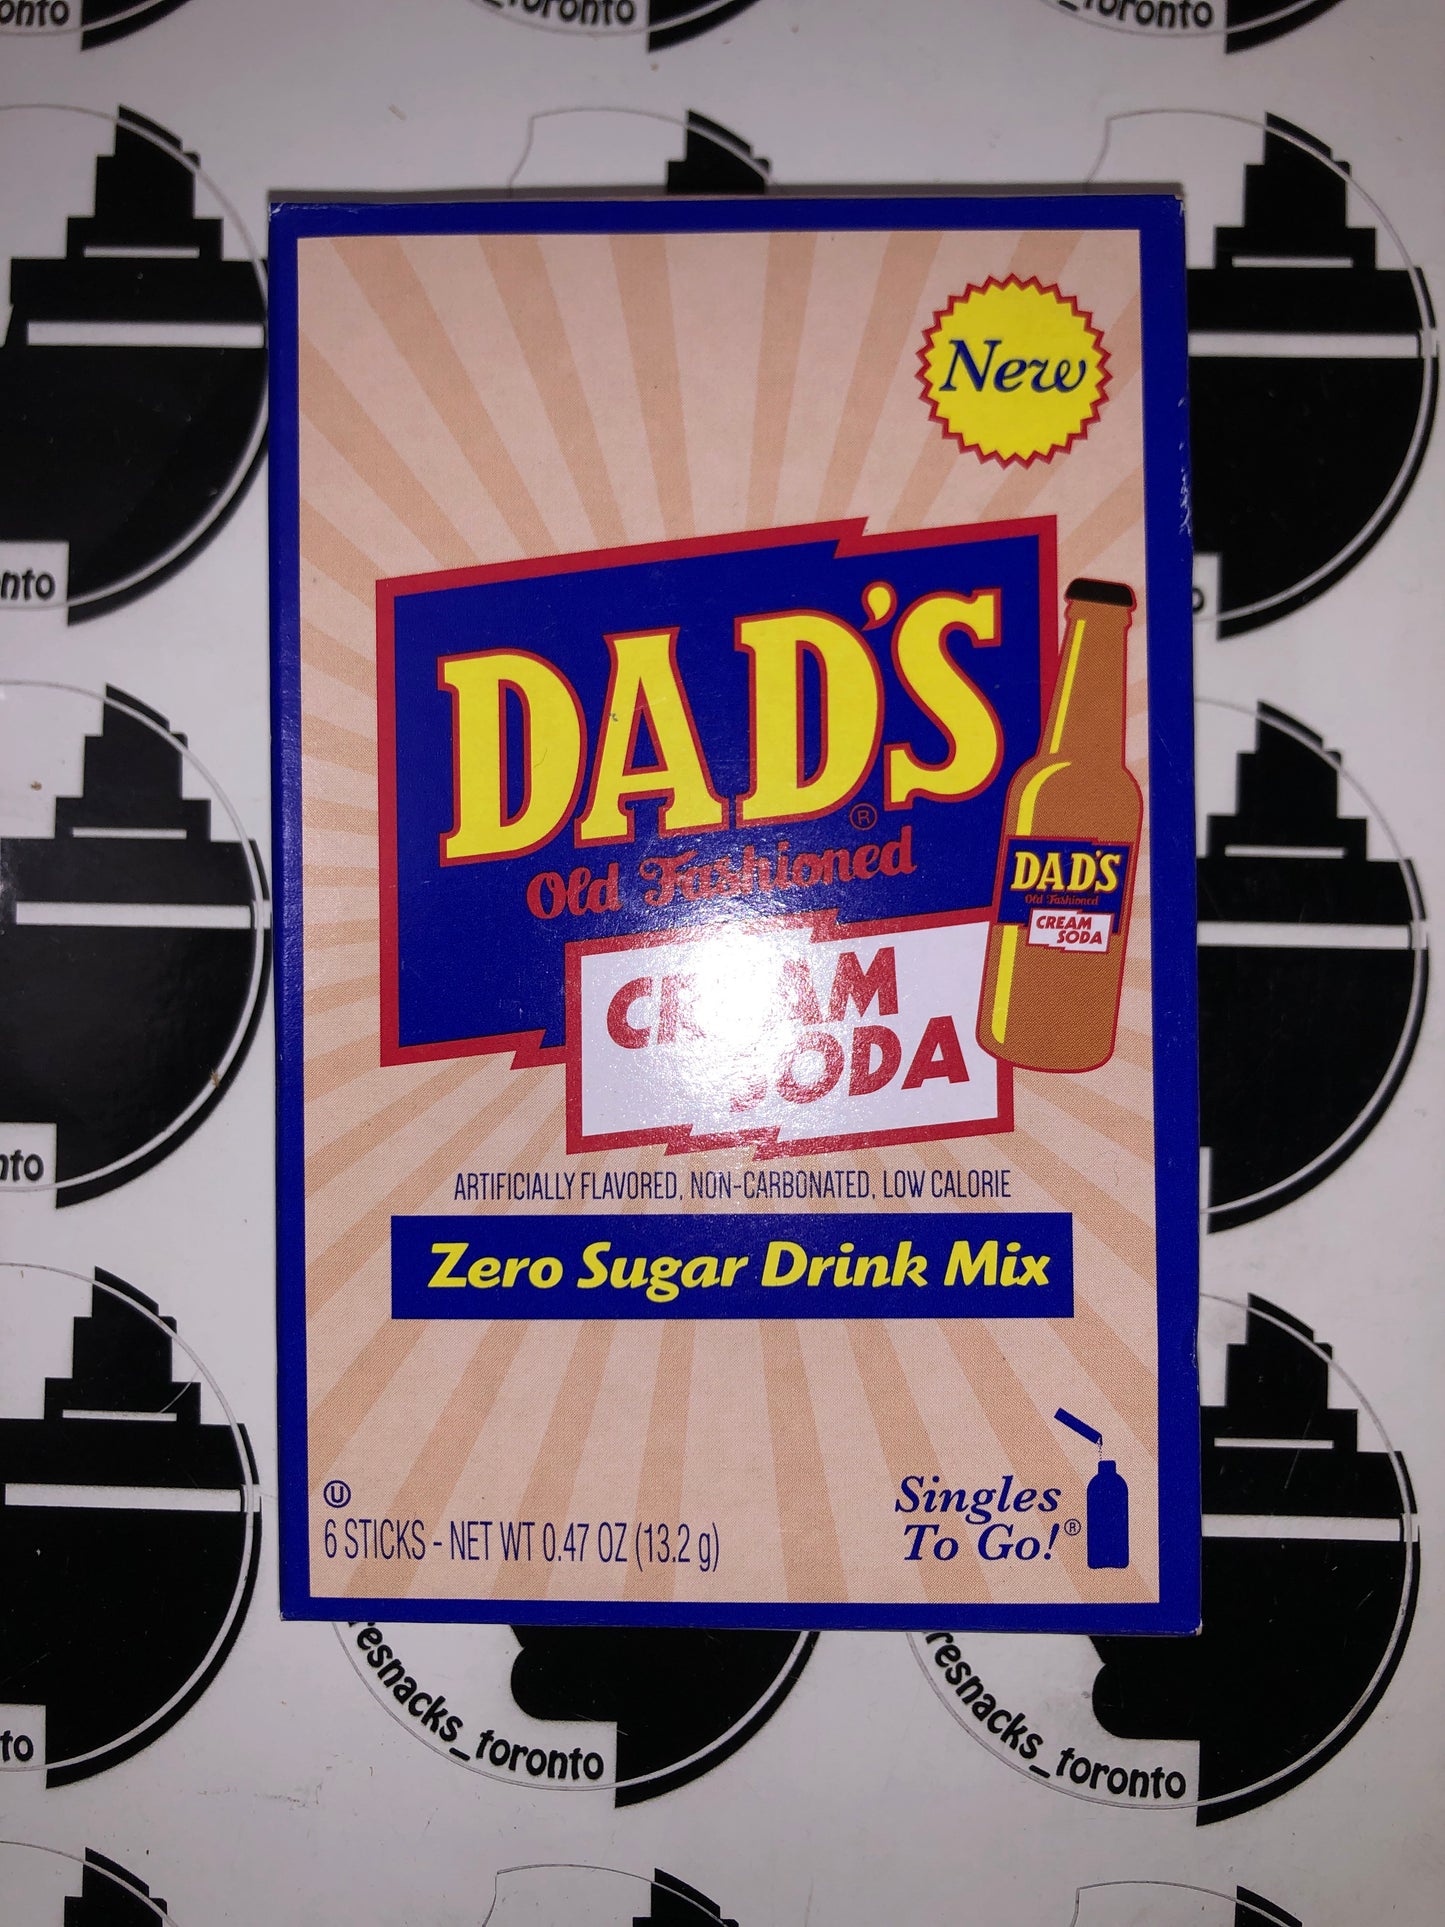 Dads Cream Soda Singles to go